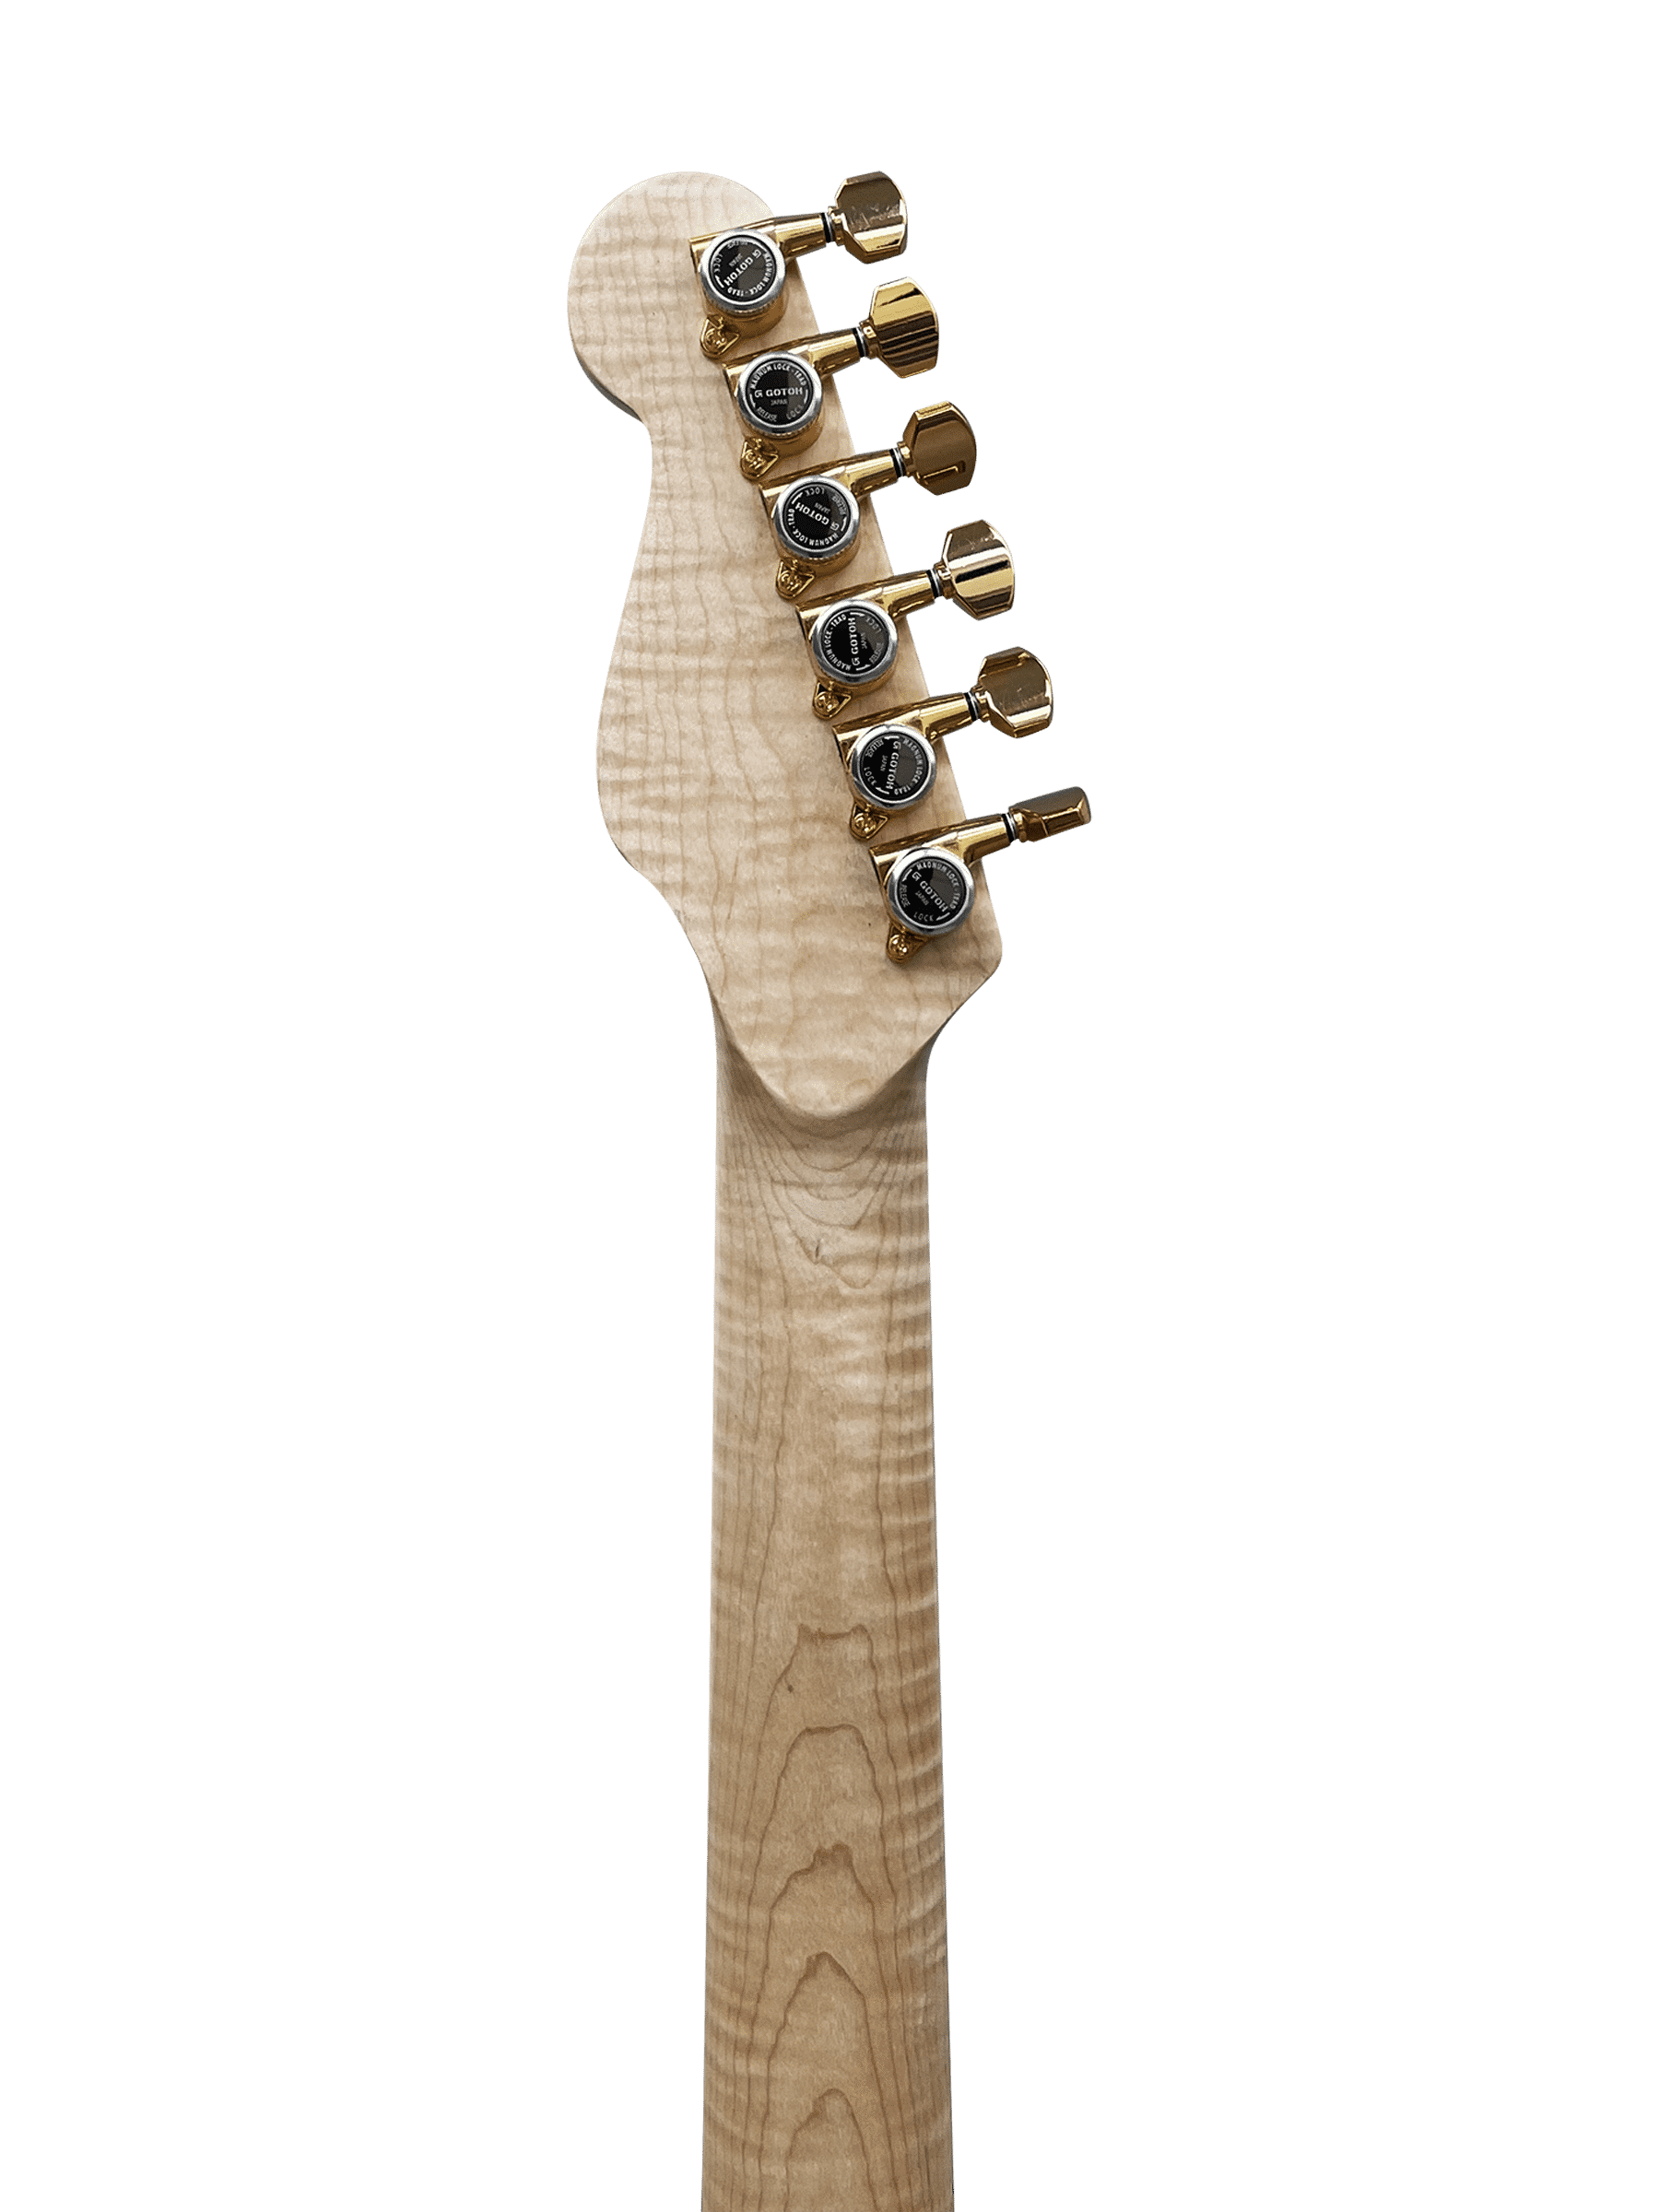 B-Magic CS White & Gold Seymour Duncan Gotoh - 10S Guitars